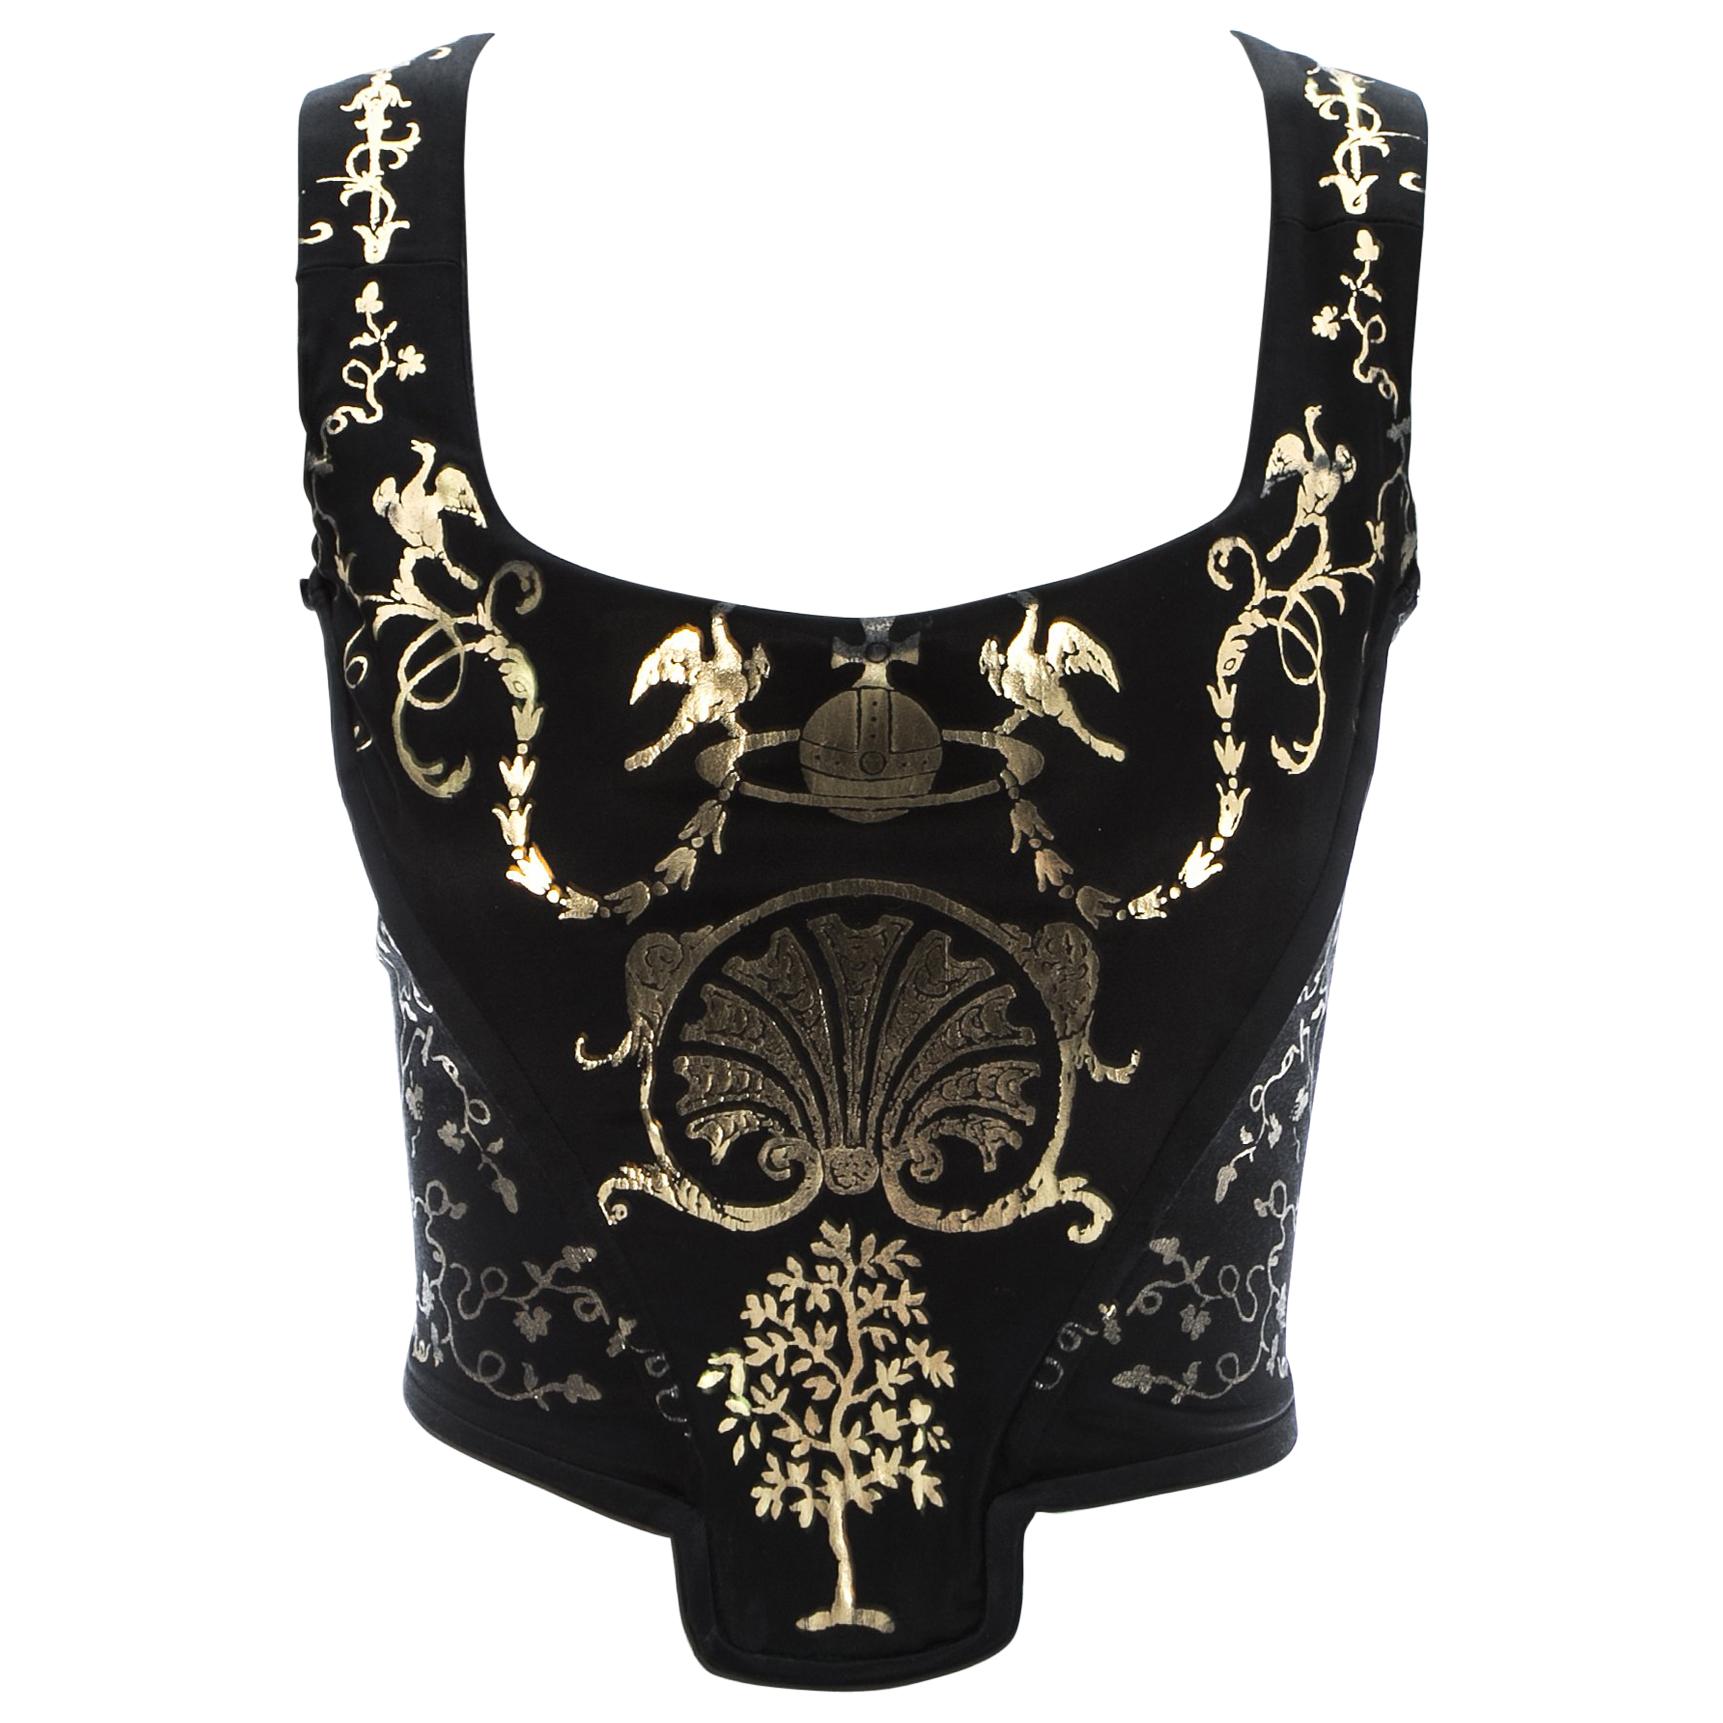 Viviene Westwood black satin corset with metallic gold motifs, fw 1990 For Sale